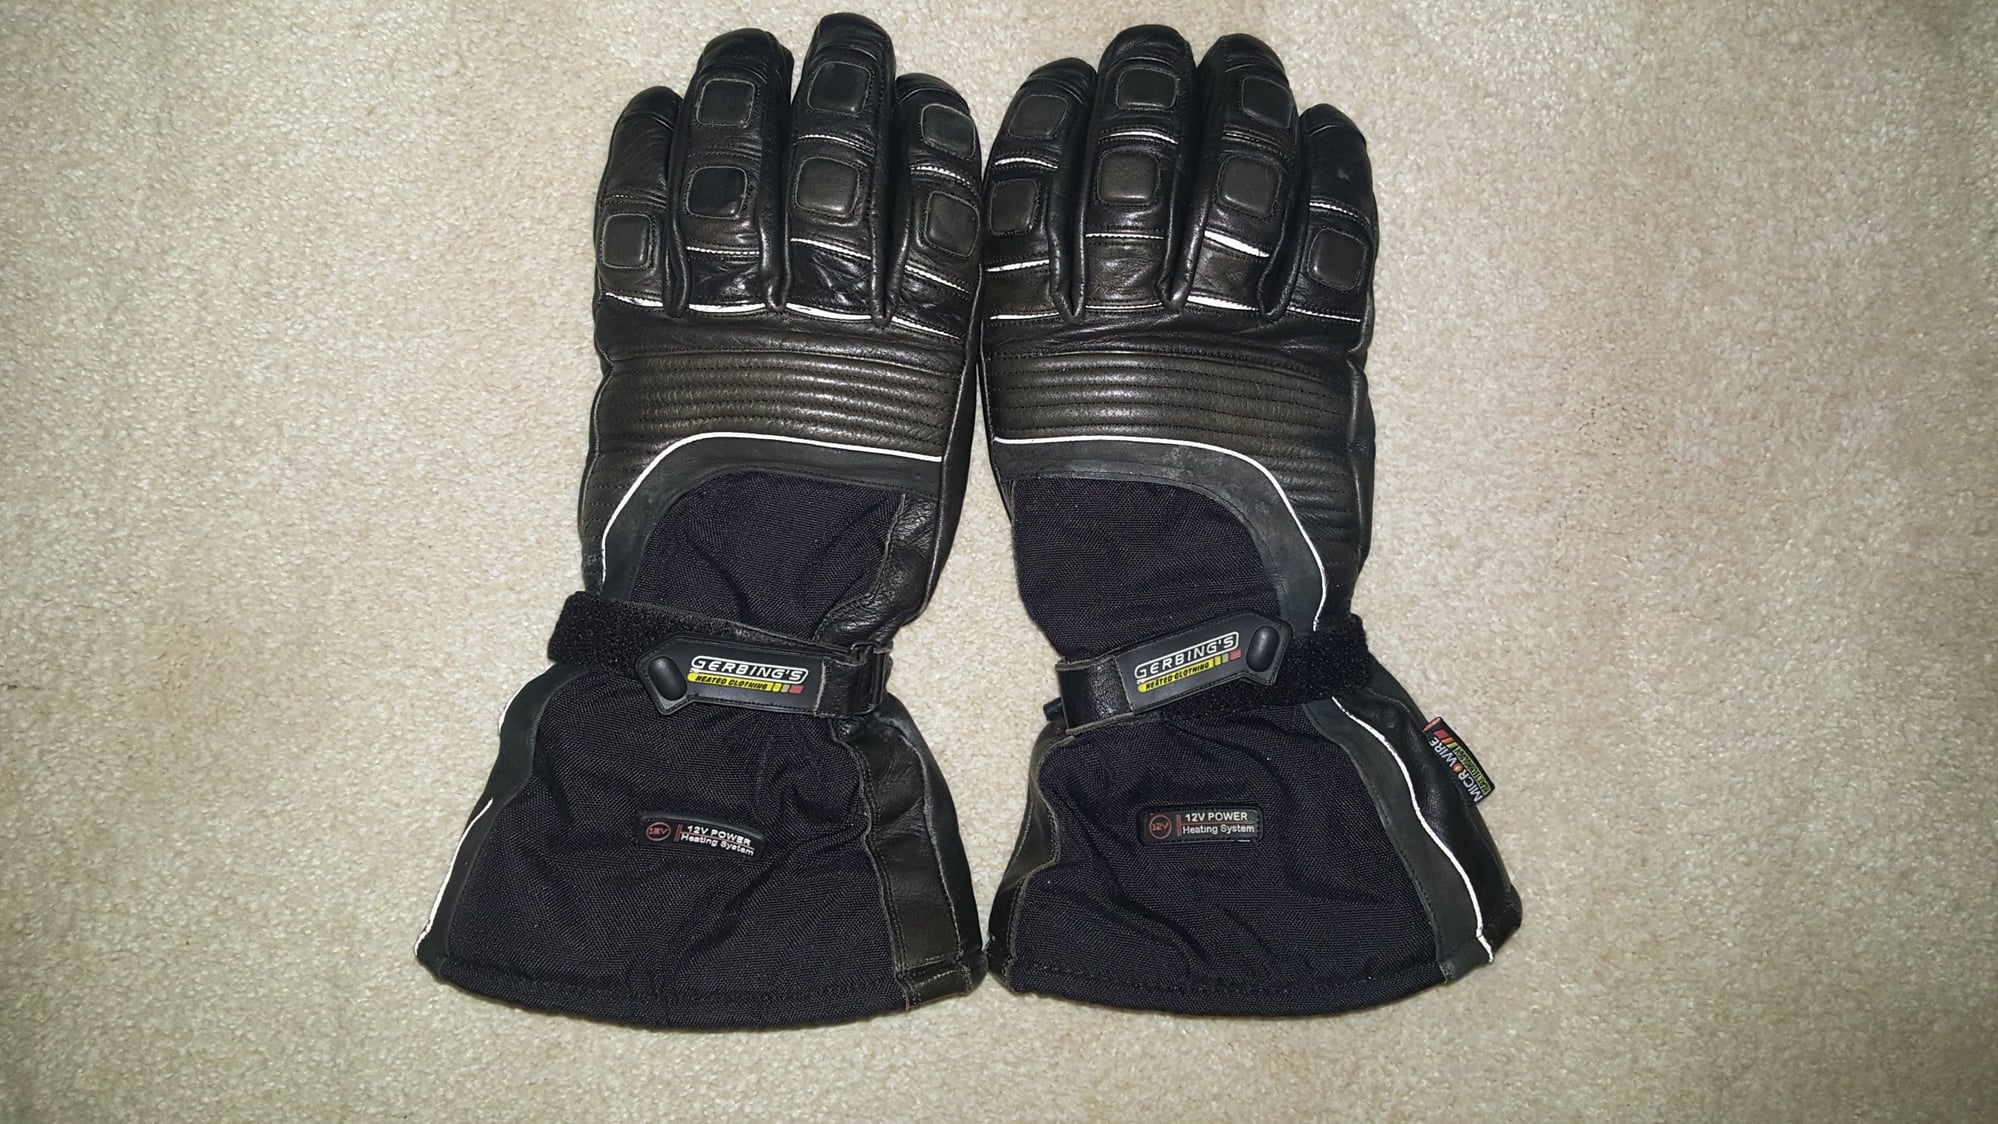 Heated Gerbings gloves, Harley jacket, controller - Harley Davidson Forums